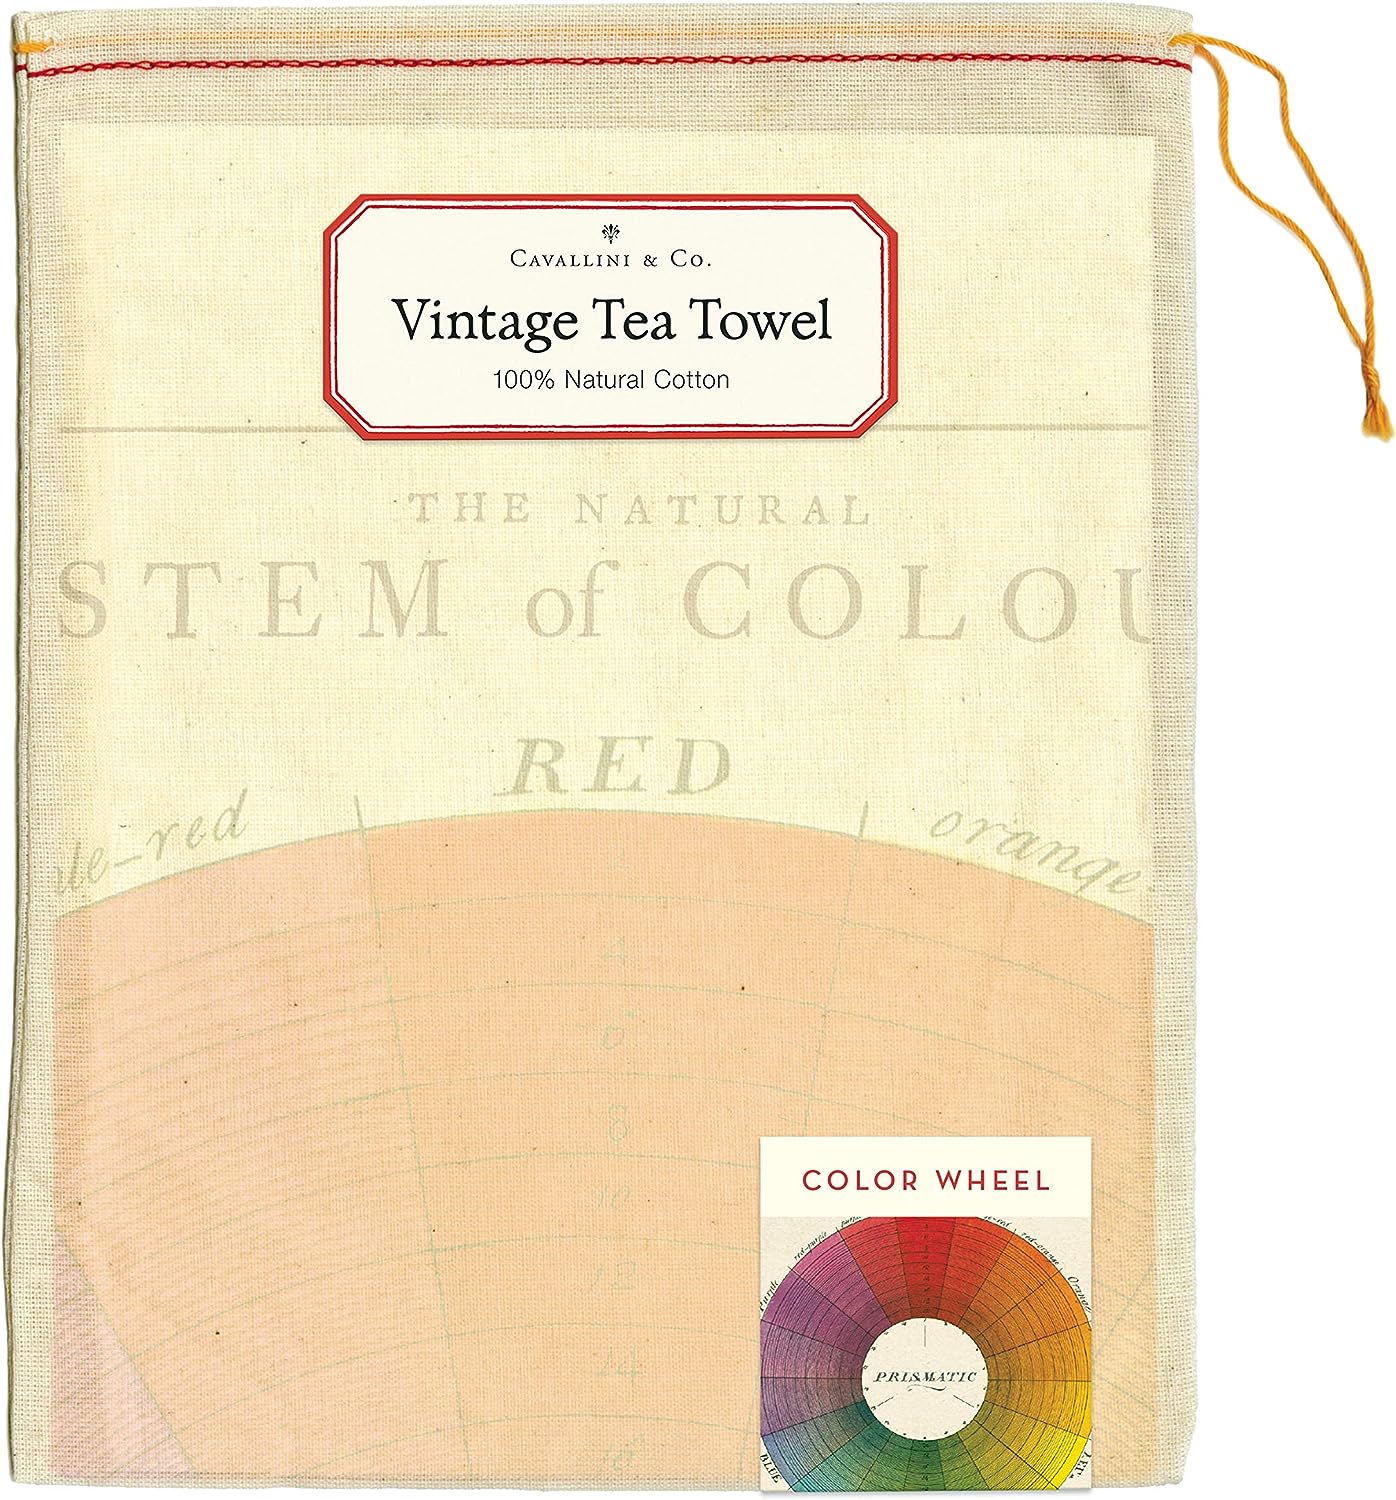 Cavallini Tea Towel "Color Wheel"